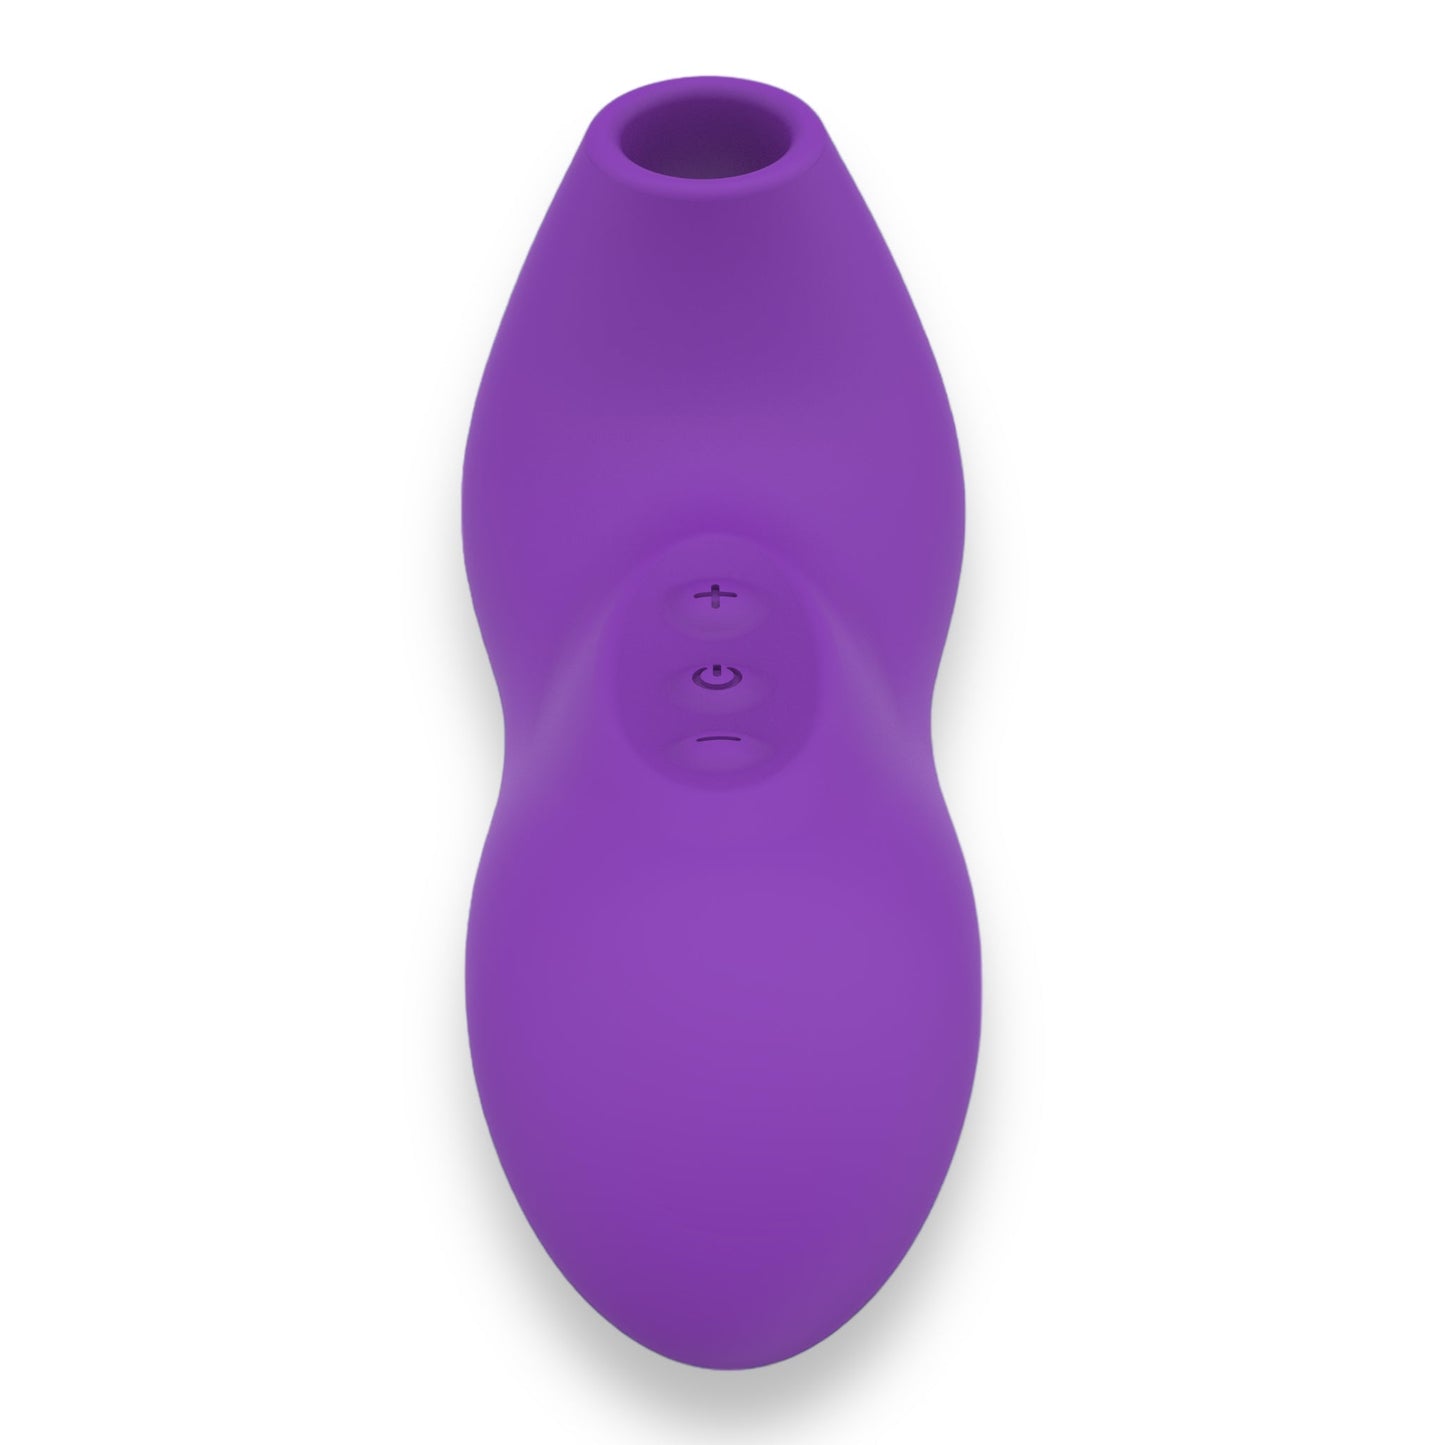 Power Escorts - BR160 - Oral Queen Air Sucker- Waterproof - Oral Sucker - Clitoral Stimulator/Massager - 10 Modes - 3 Colors